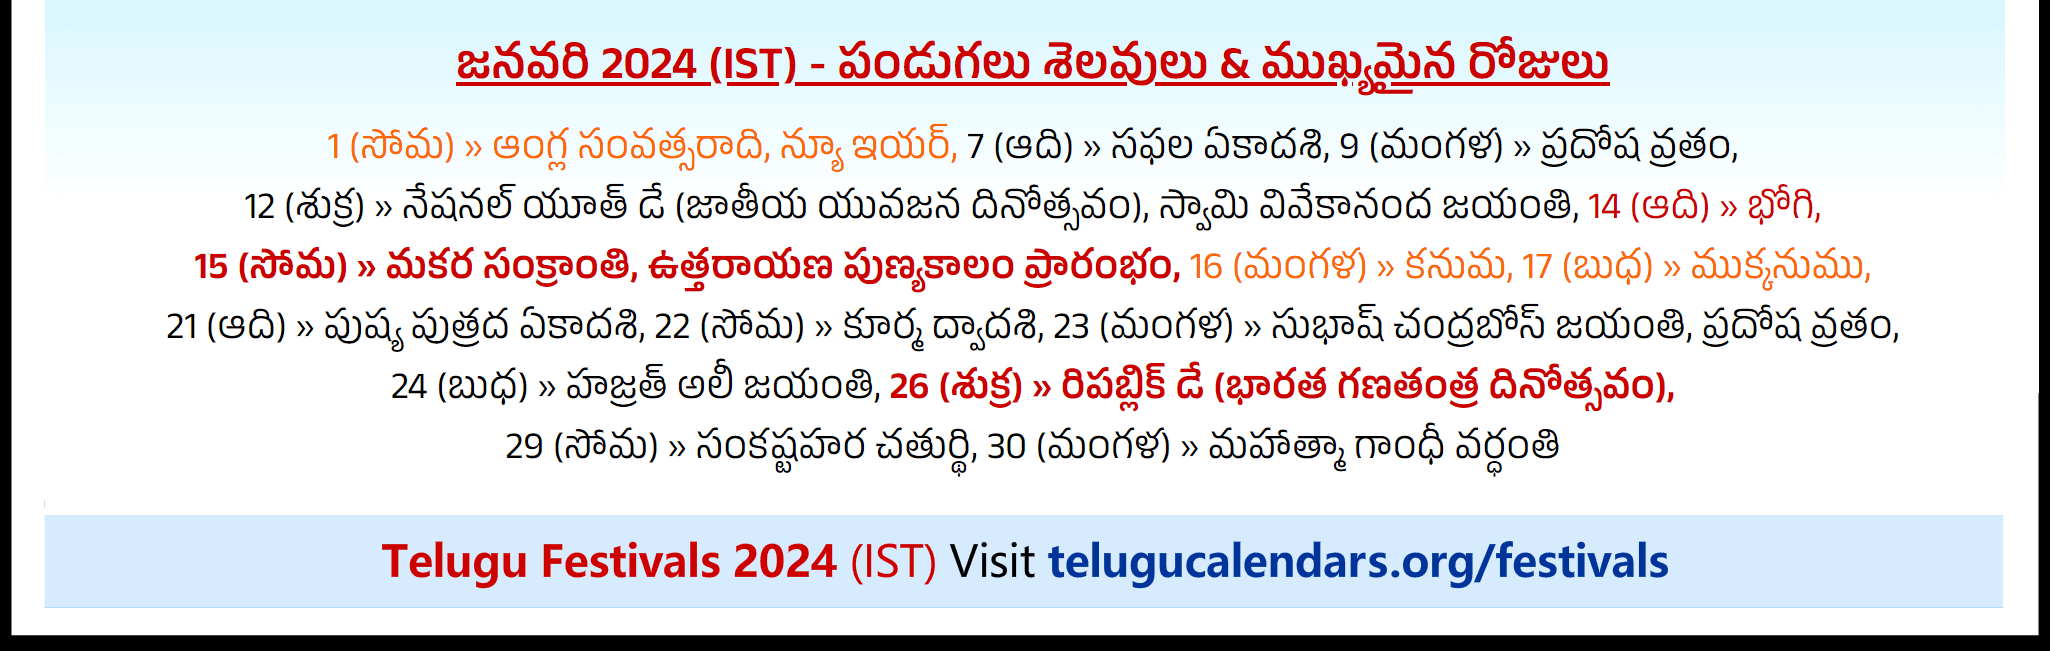 Telugu Festivals 2024 January San Francisco